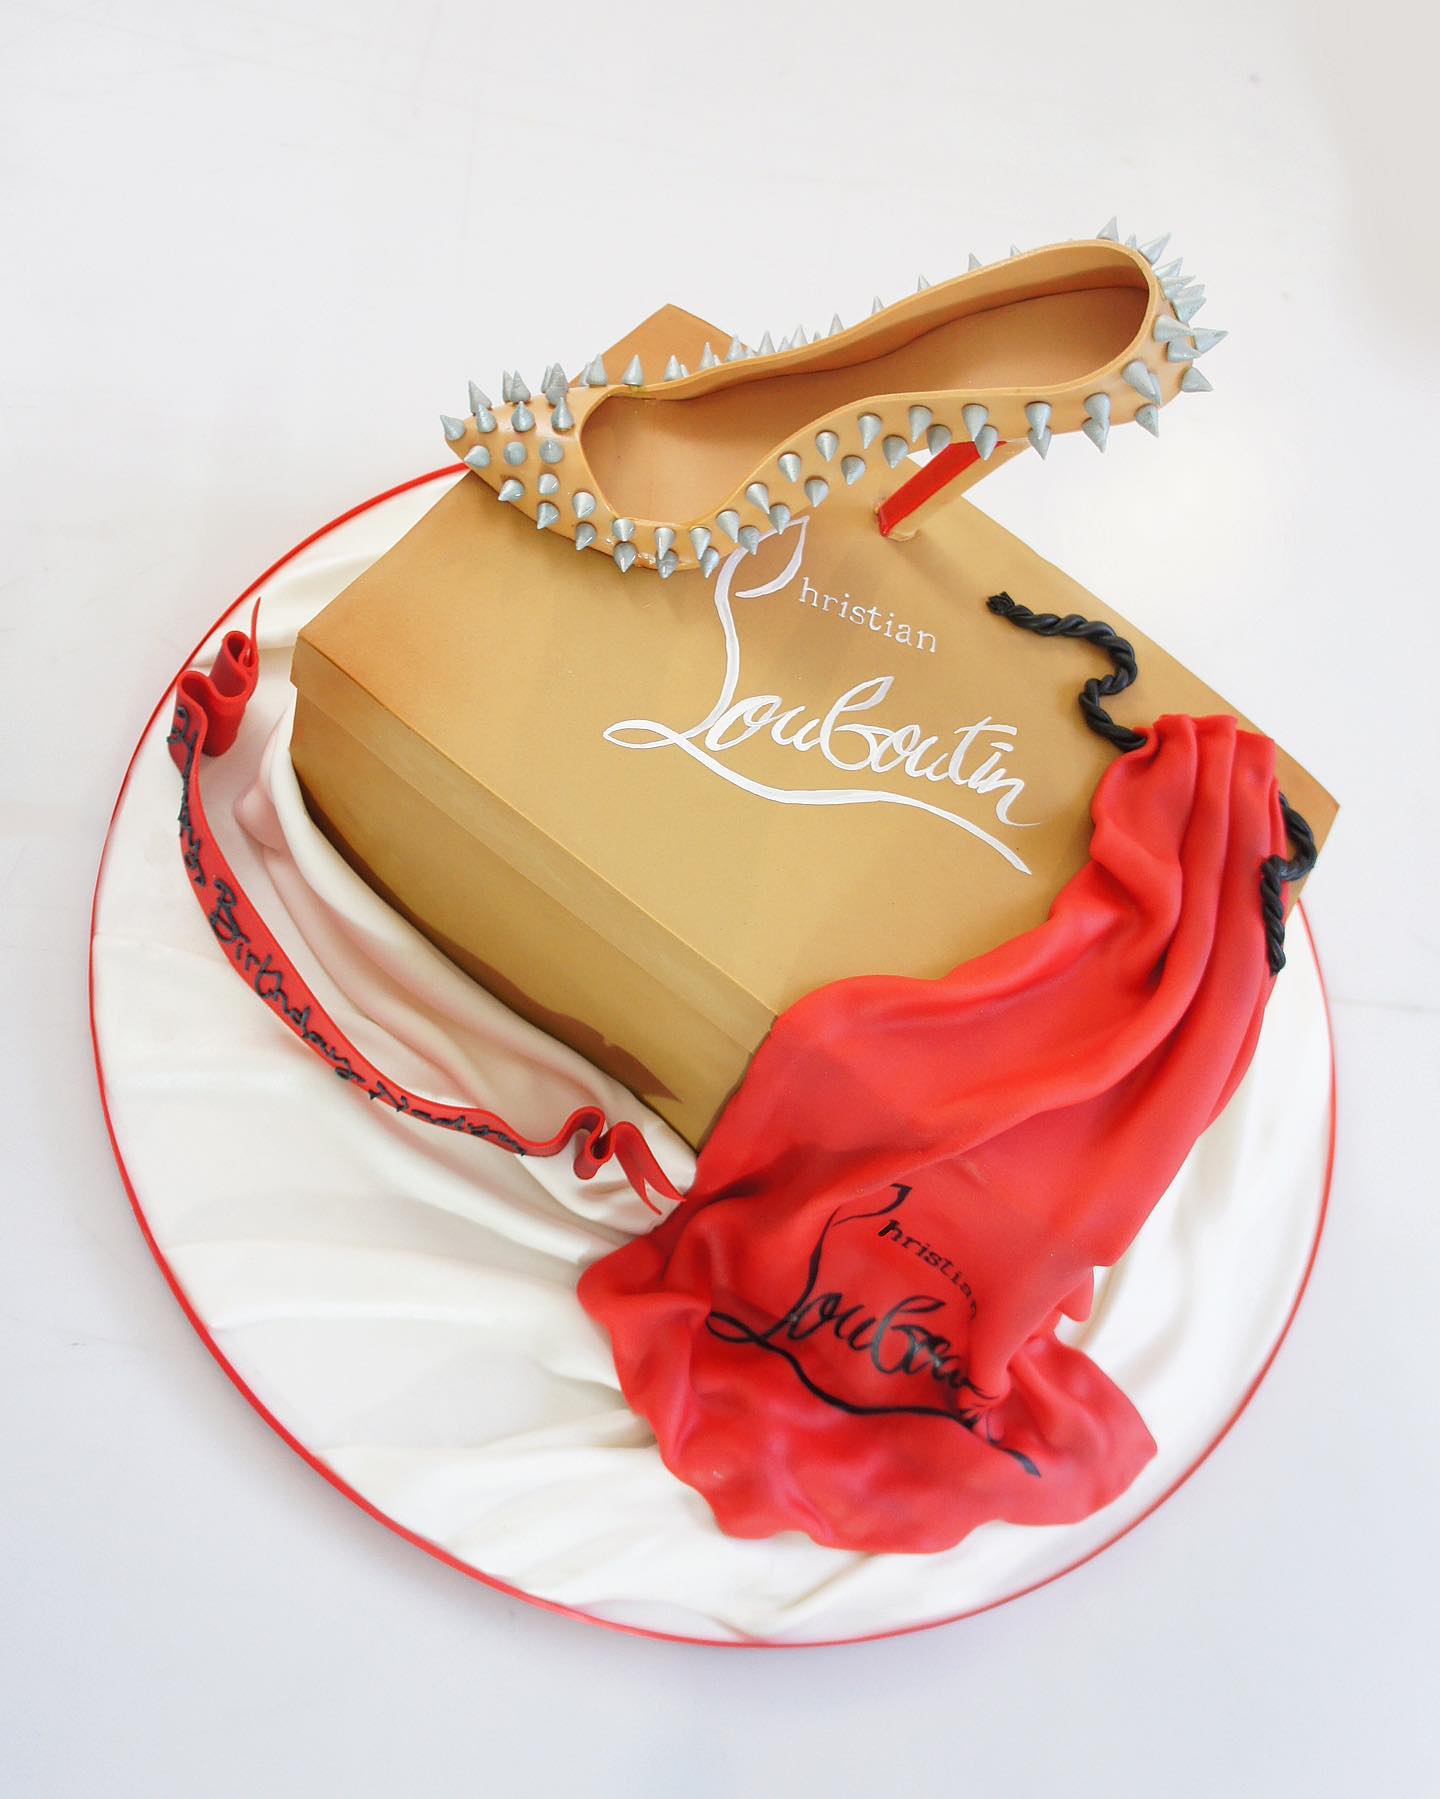 Louboutin Shoe And Box Cake – Tuck Box Cakes